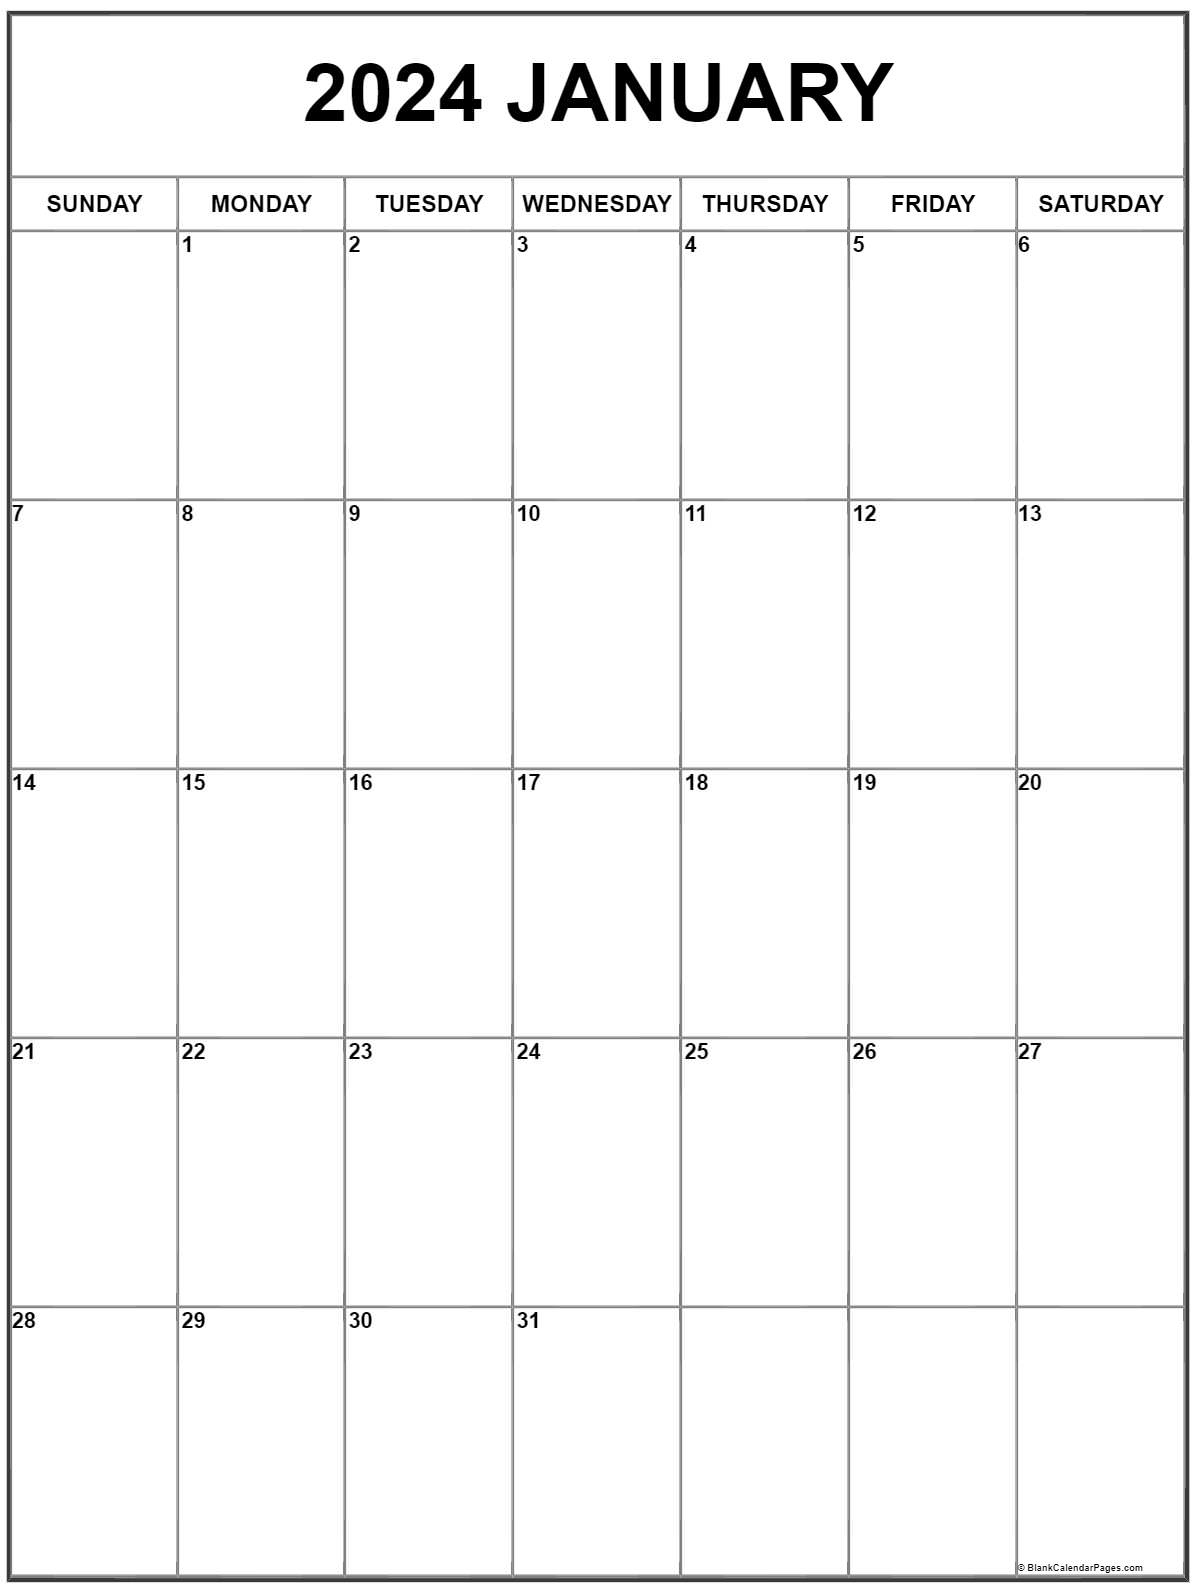 2024 Printable Monthly Calendar Portrait Susi Zilvia | Free Printable 2024 Monthly Calendar Portrait